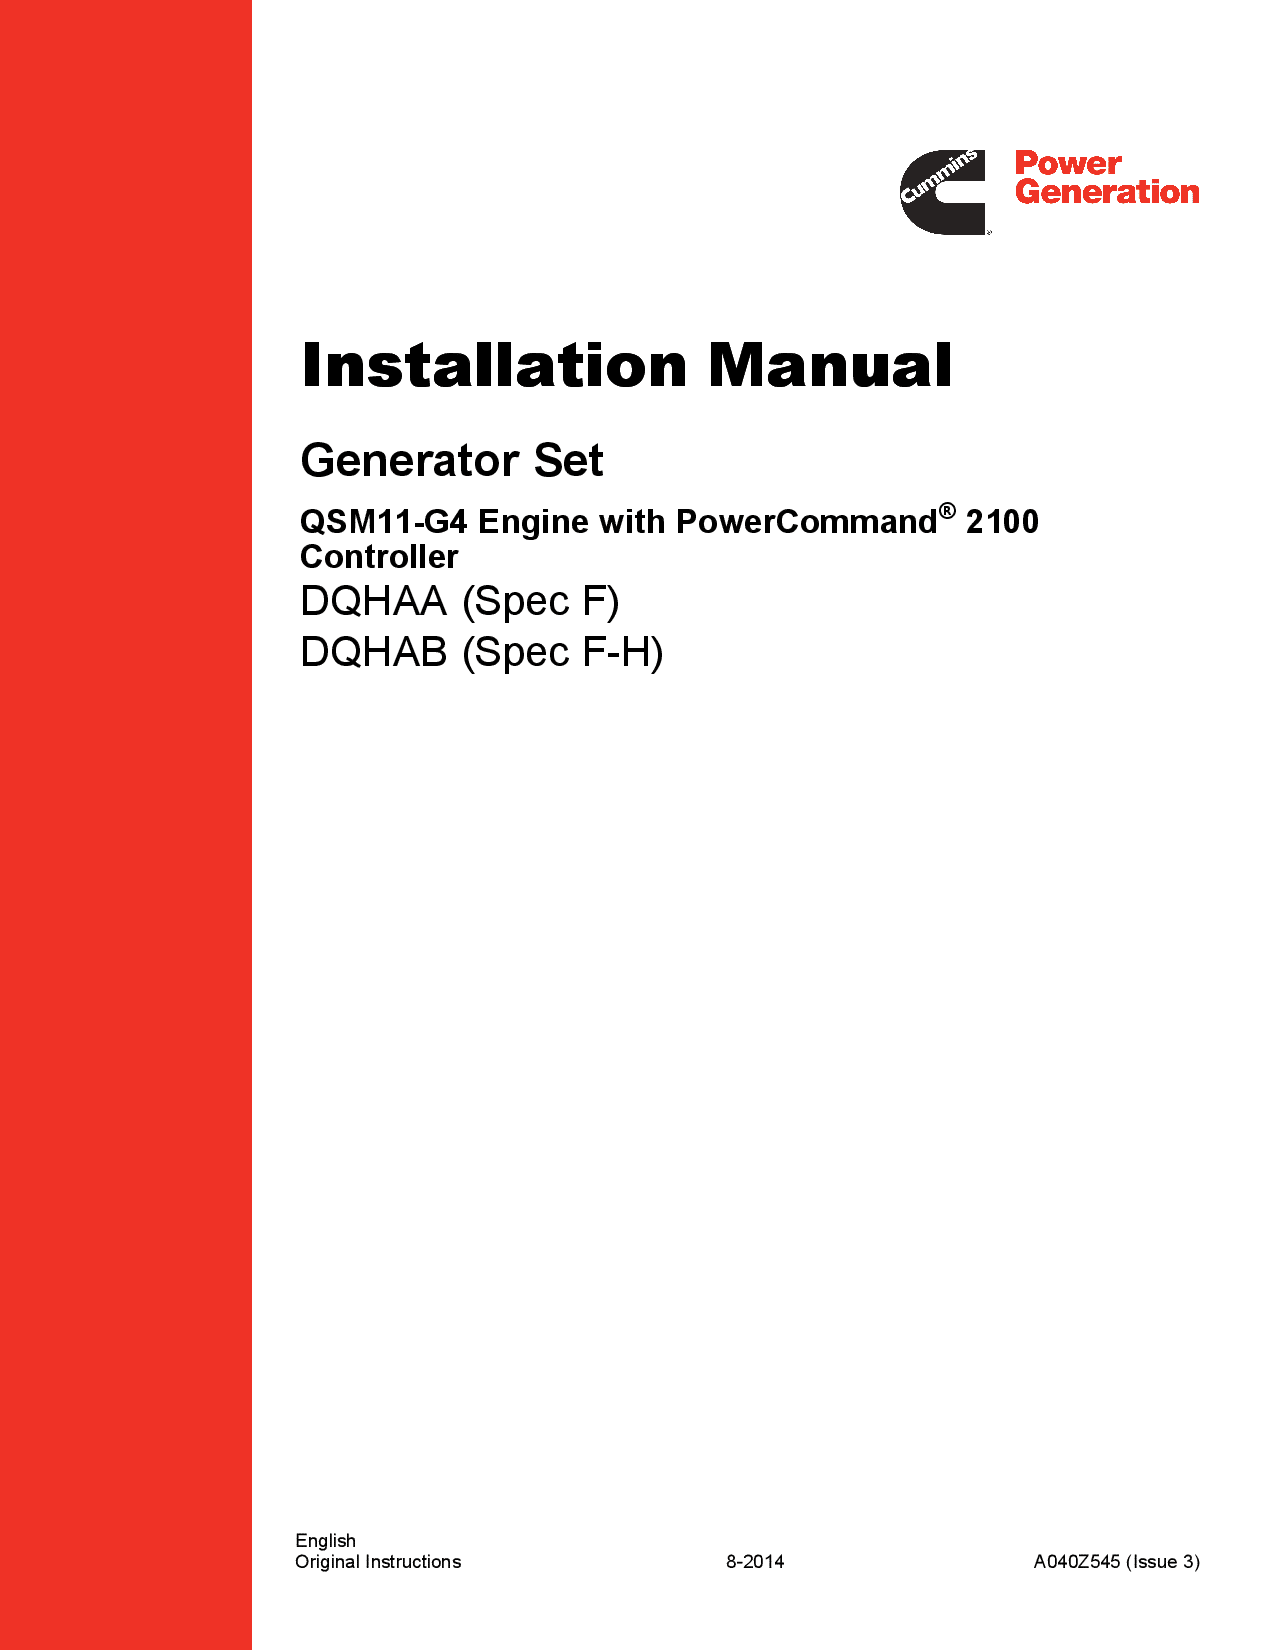 Cummins qsm11 engine parts manual